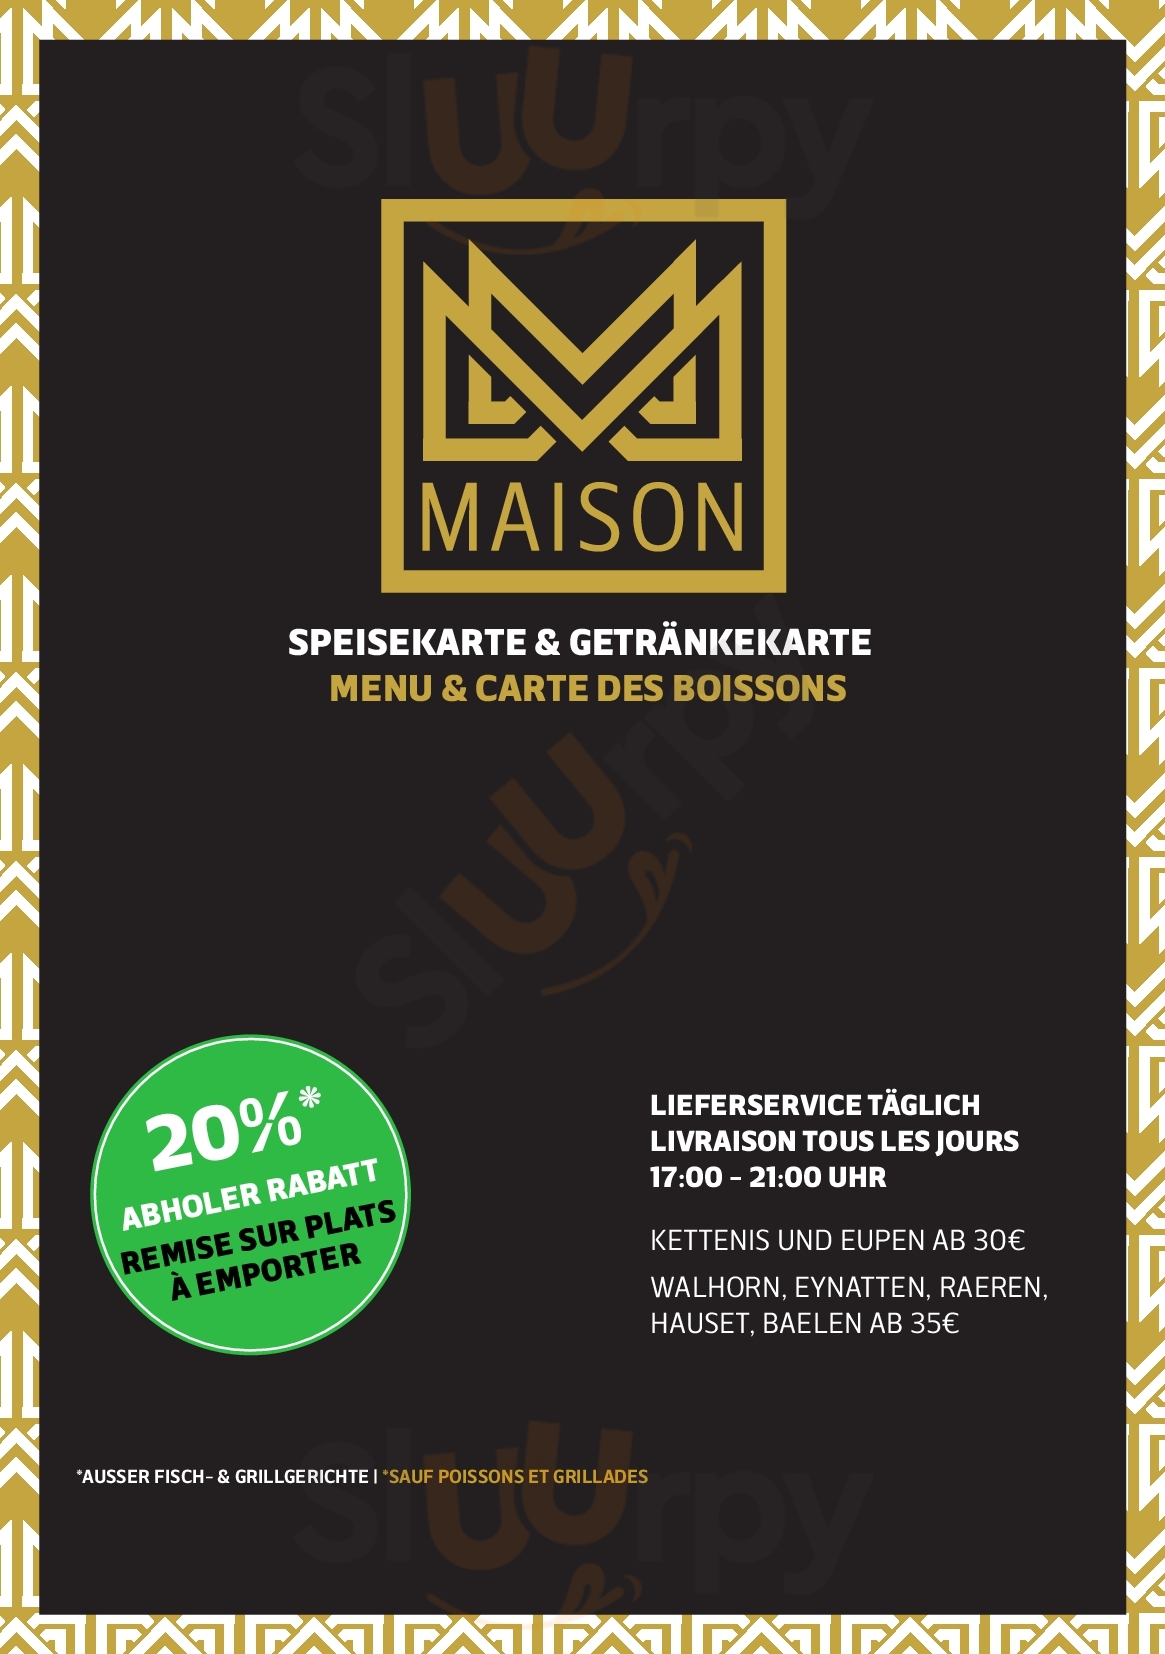 Maison Beef & More Restaurant Eupen Menu - 1